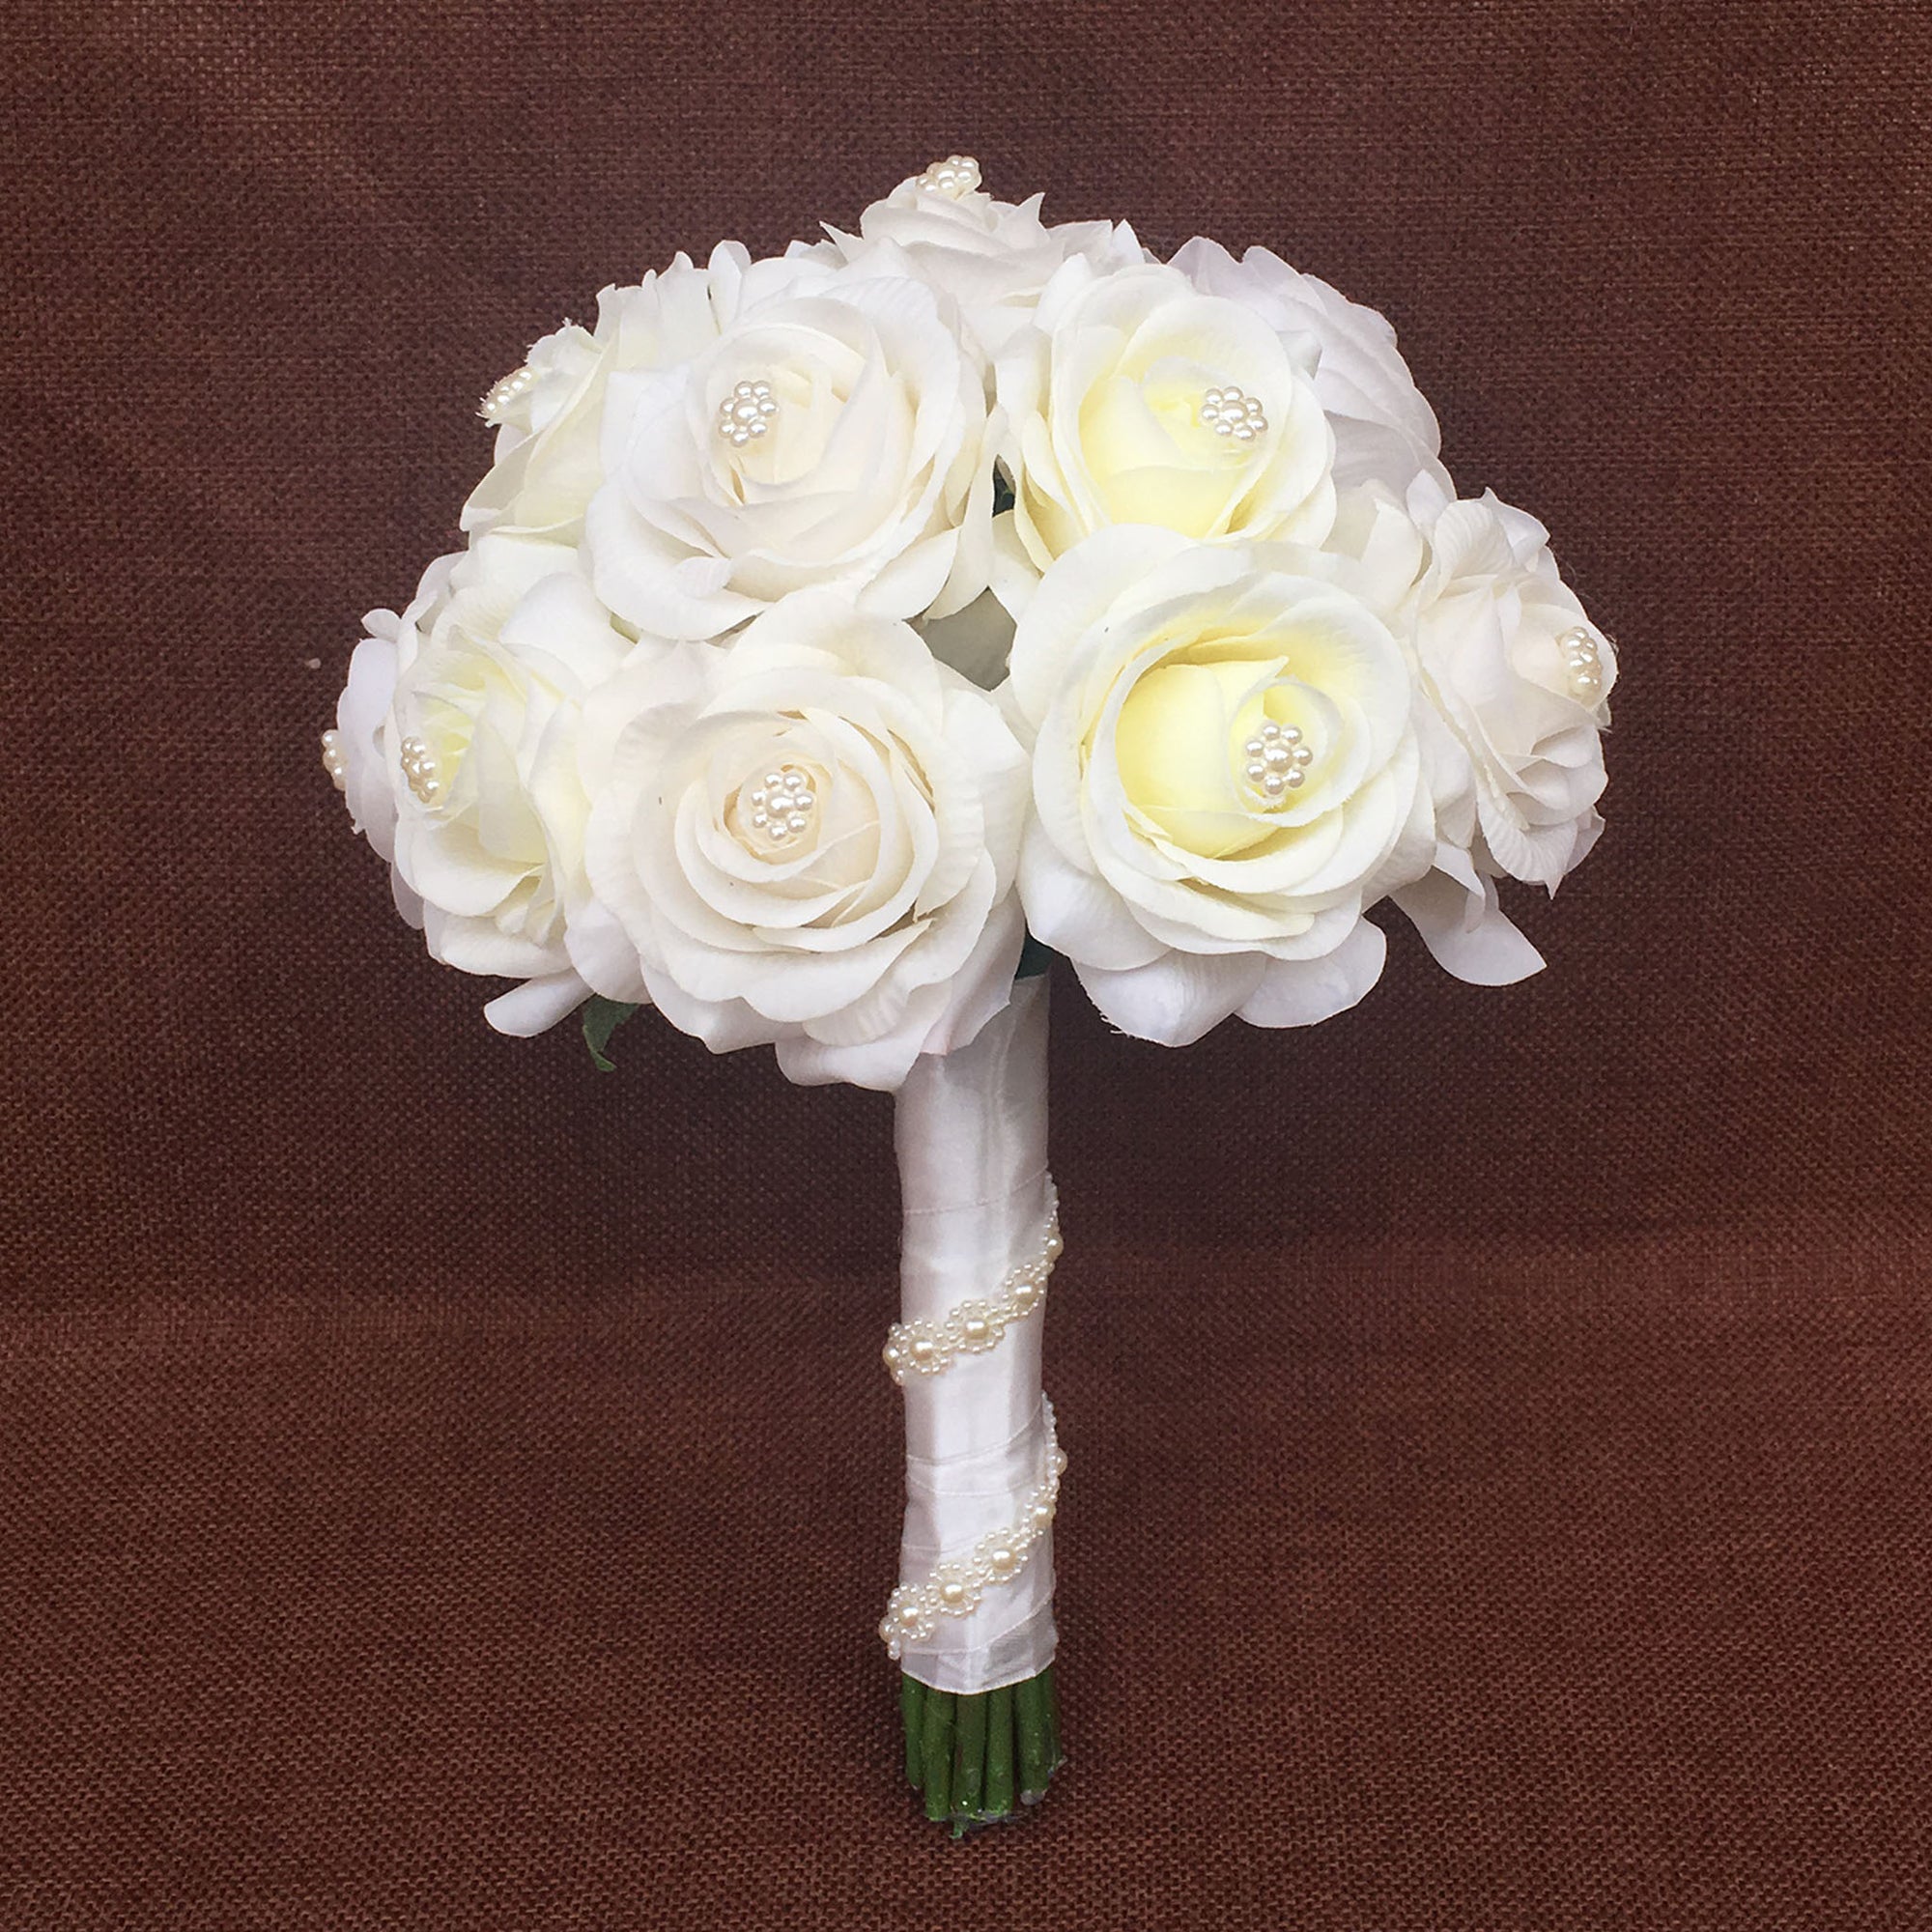 Groom Boutonniere Cream White Roses Flower Wedding Bouquet Bridal